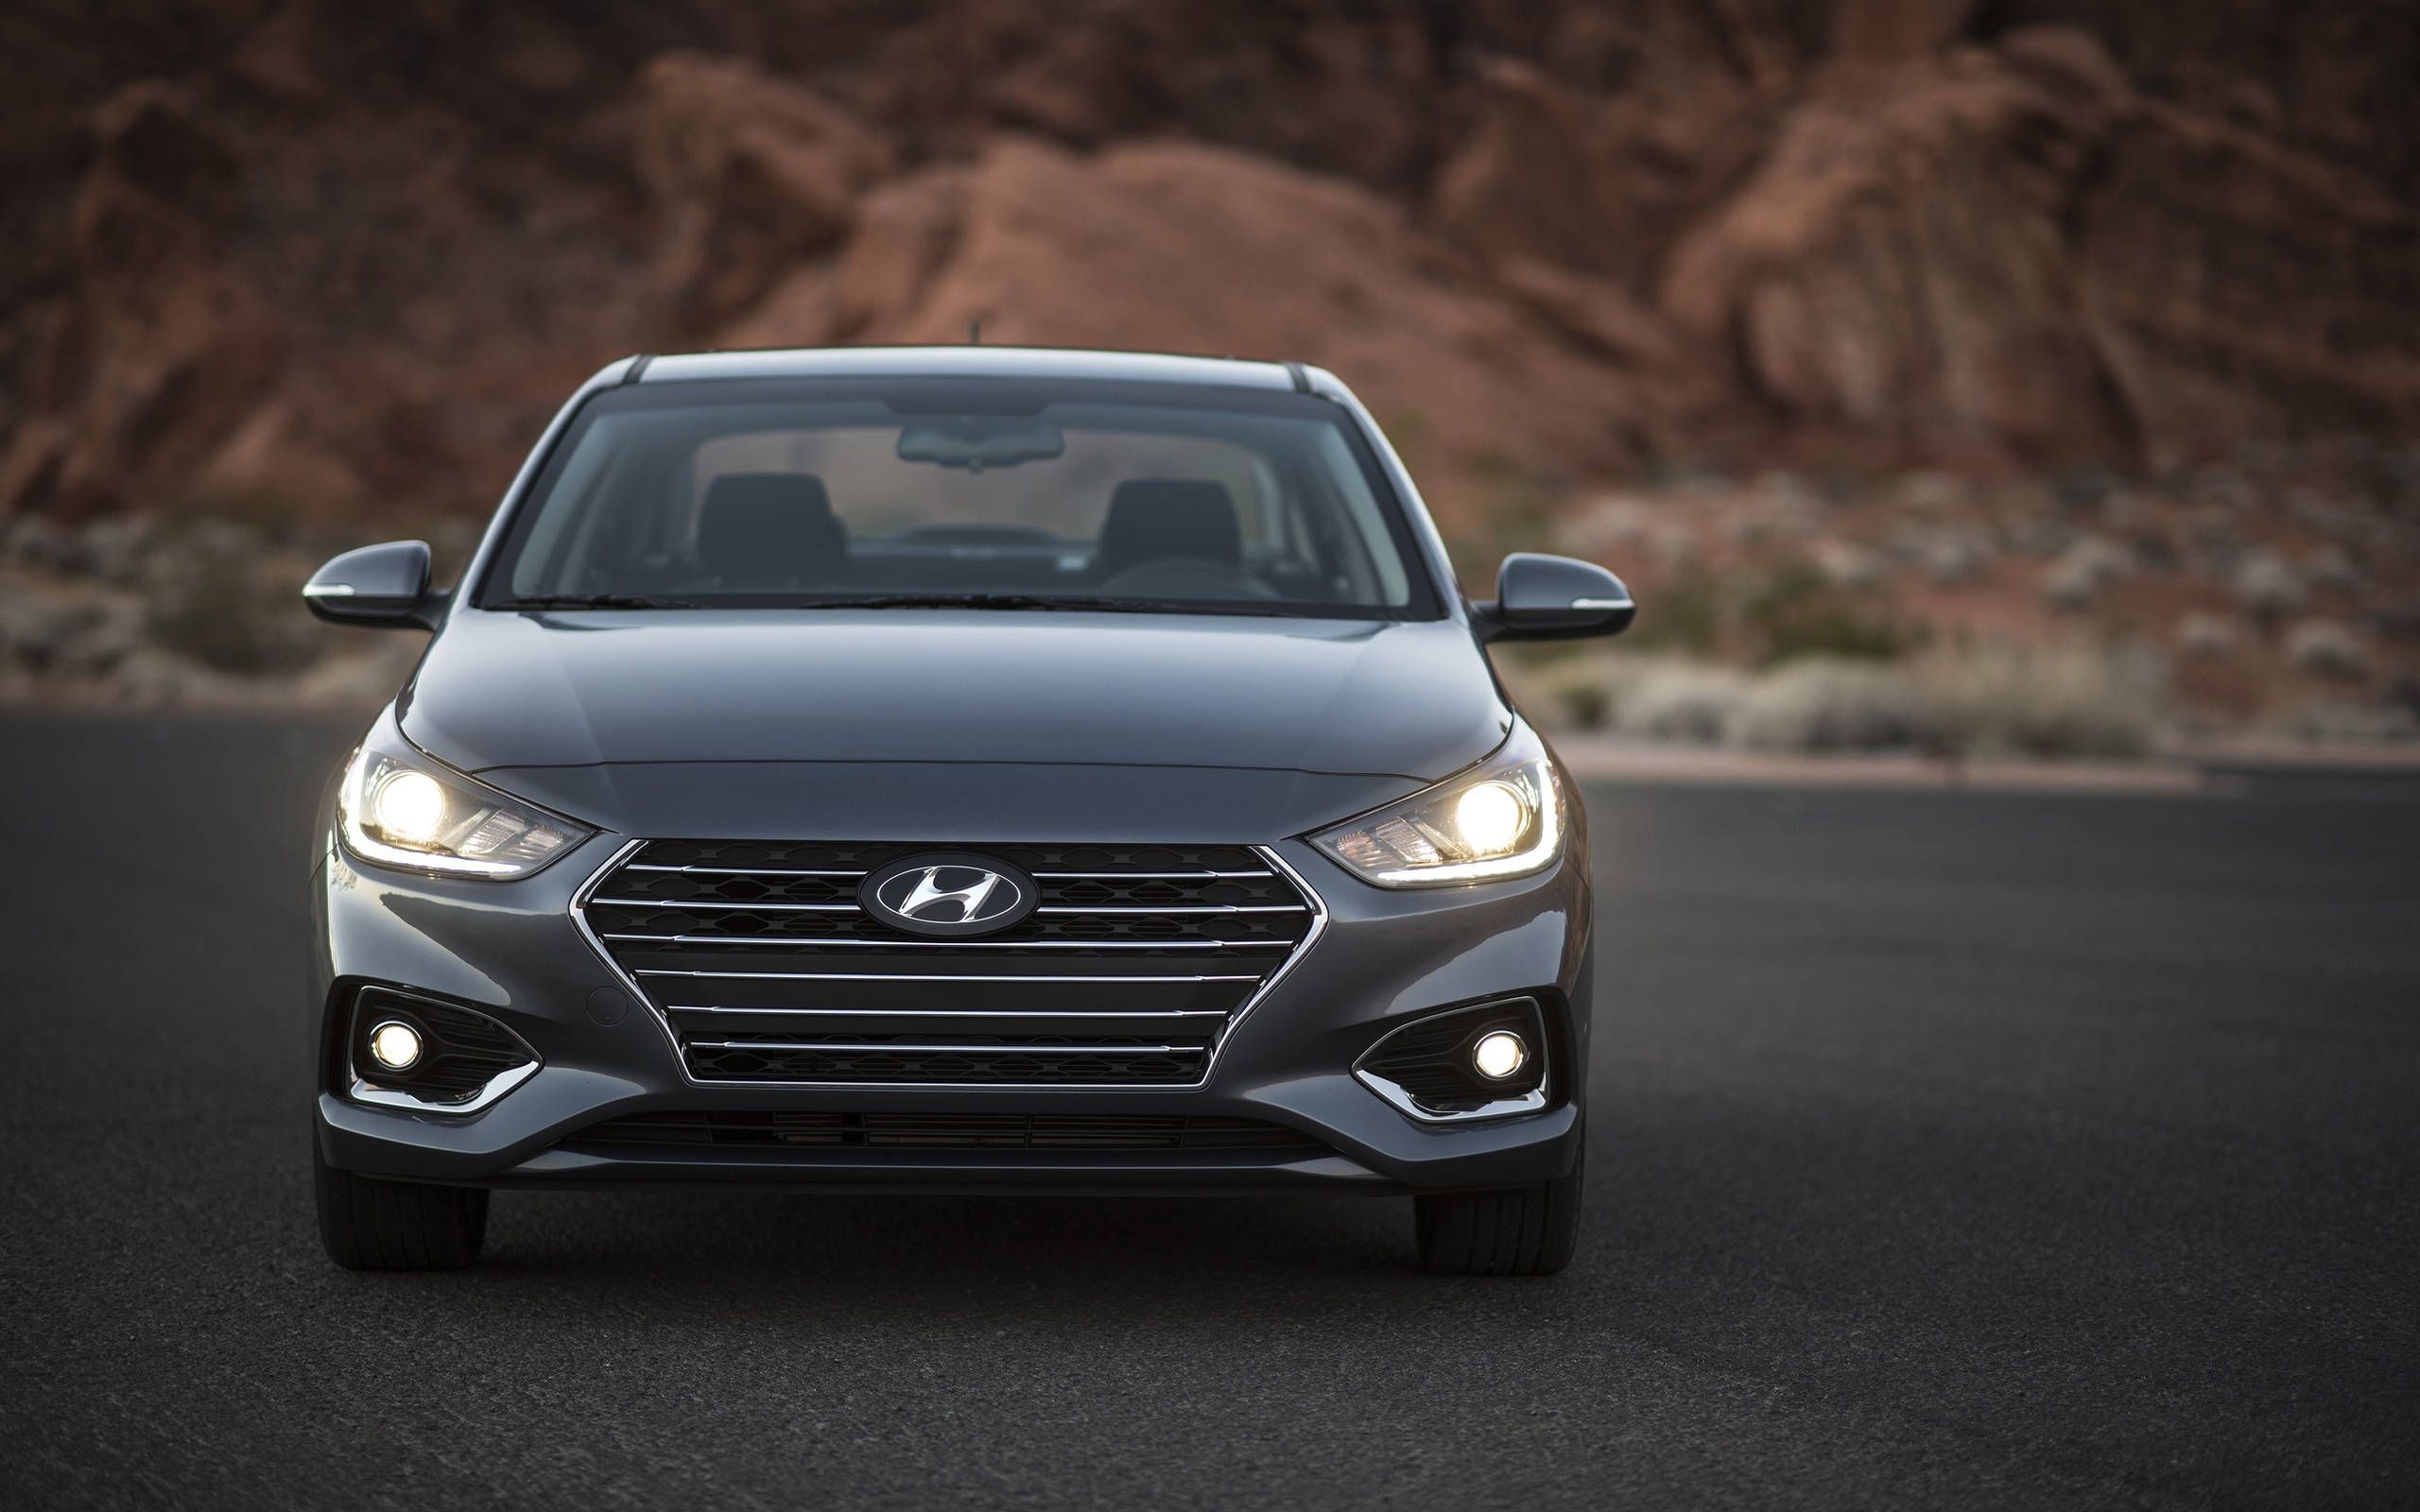 Hyundai Accent, 2018 model, First drive review, Fun driving experience, 2560x1600 HD Desktop